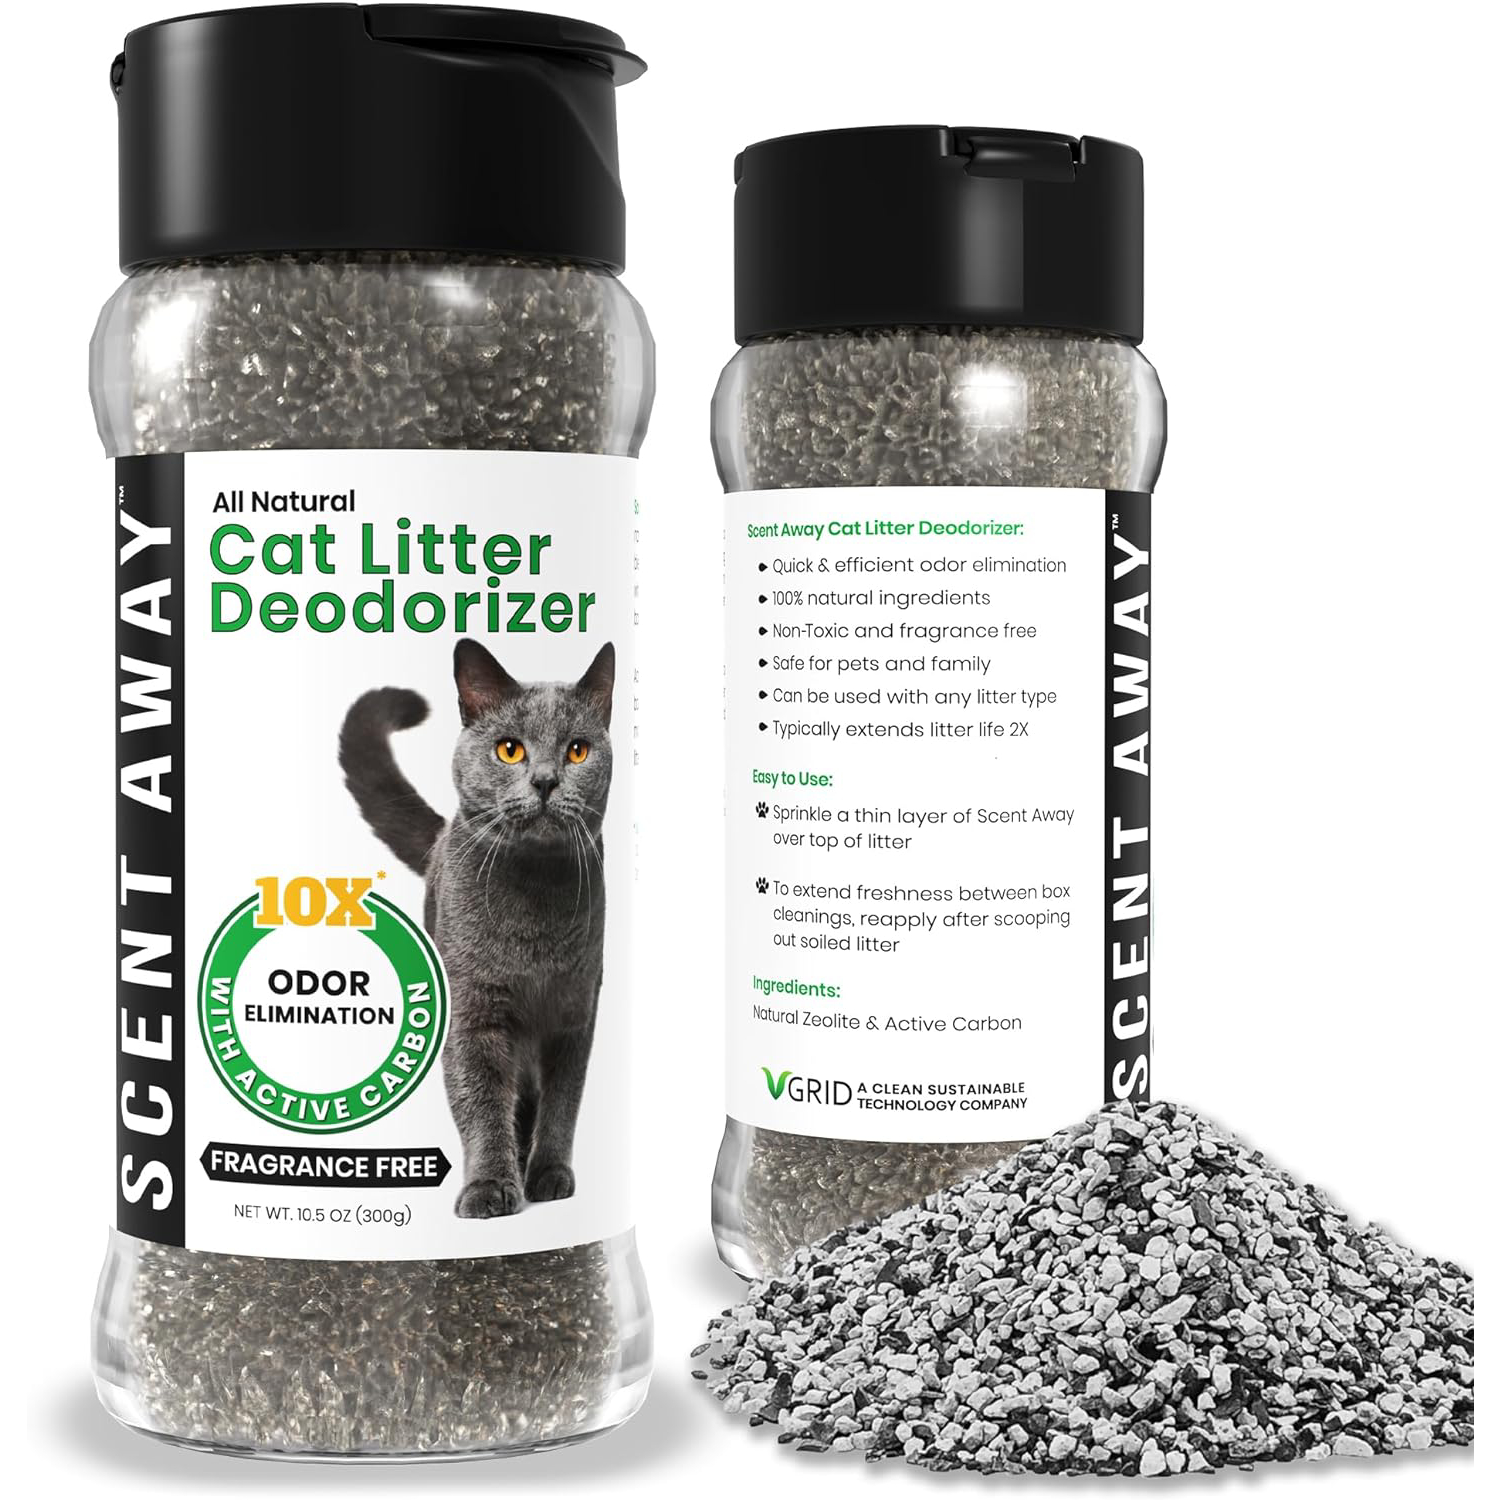 SCENT AWAY Cat Litter Deodorizer Litter Box Odor Eliminator